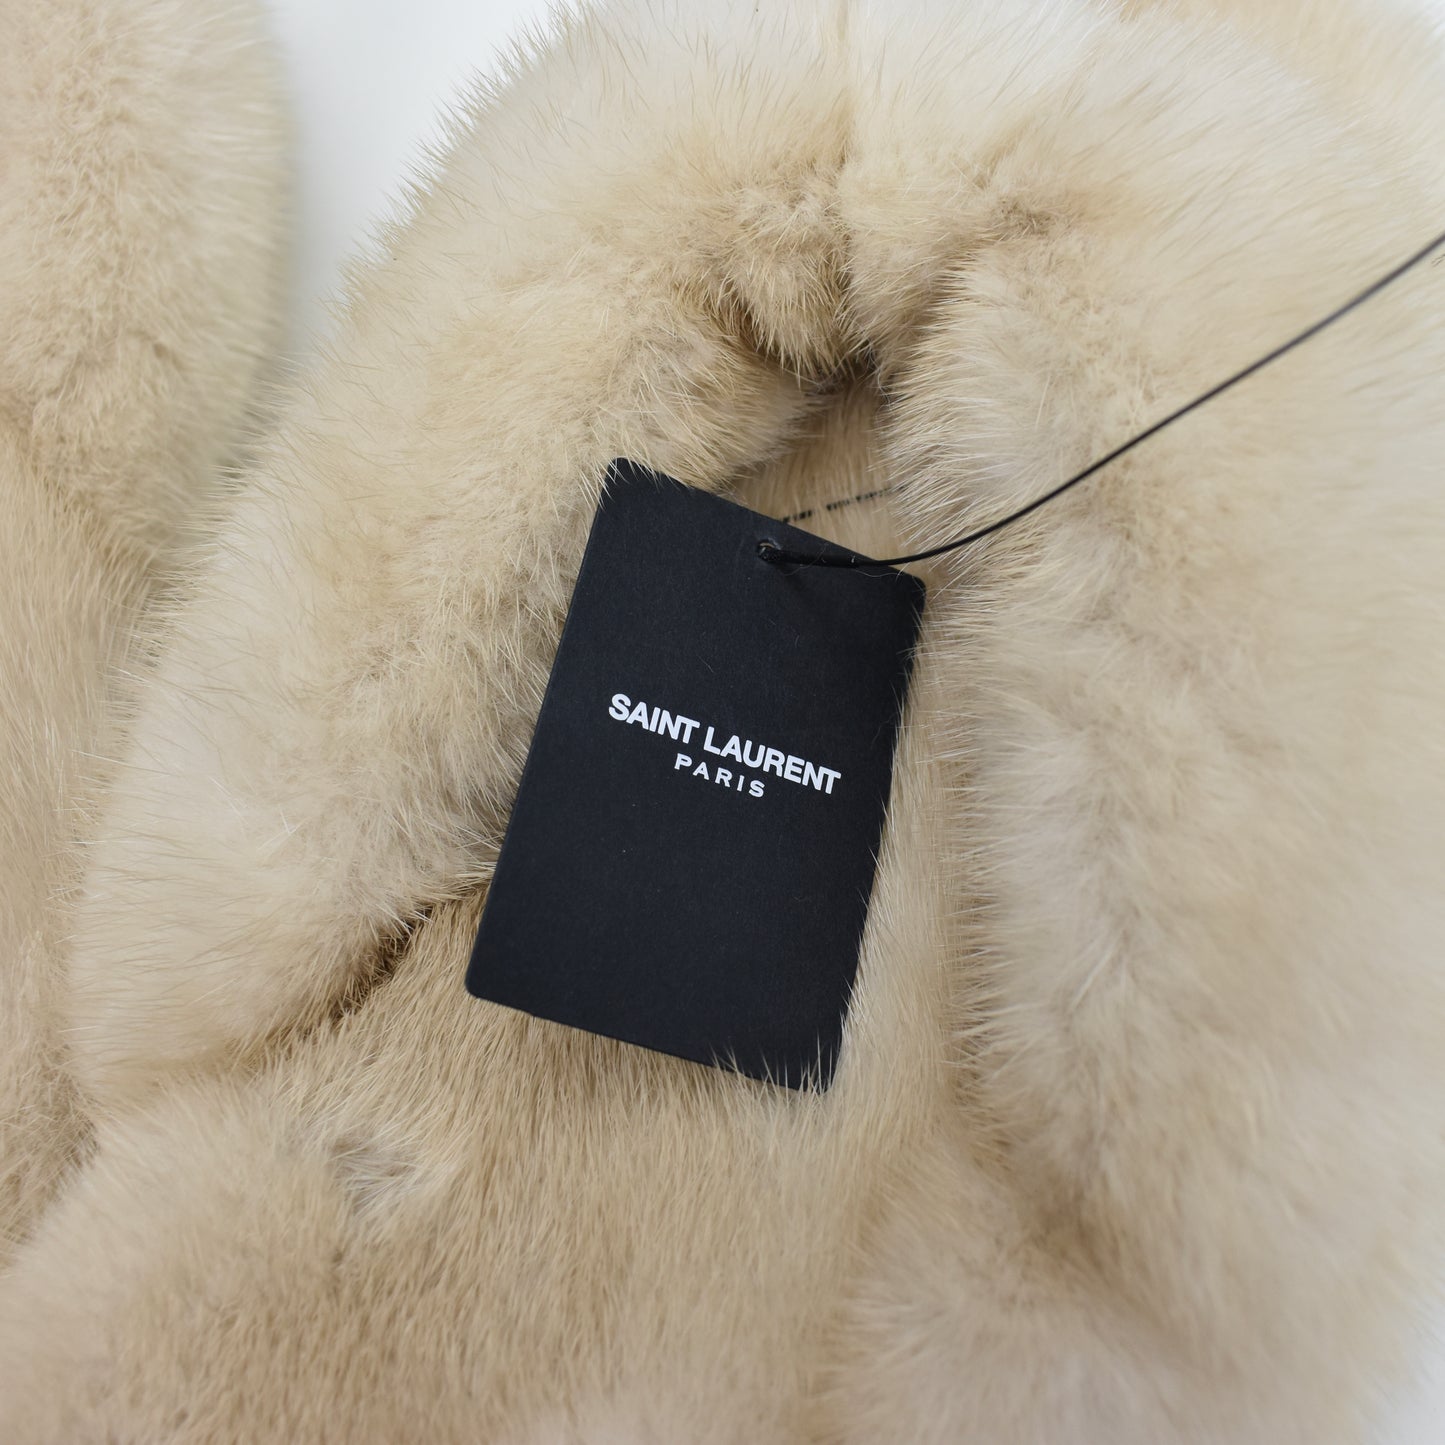 Saint Laurent - Beige Genuine Fur Pepe Flip Flops